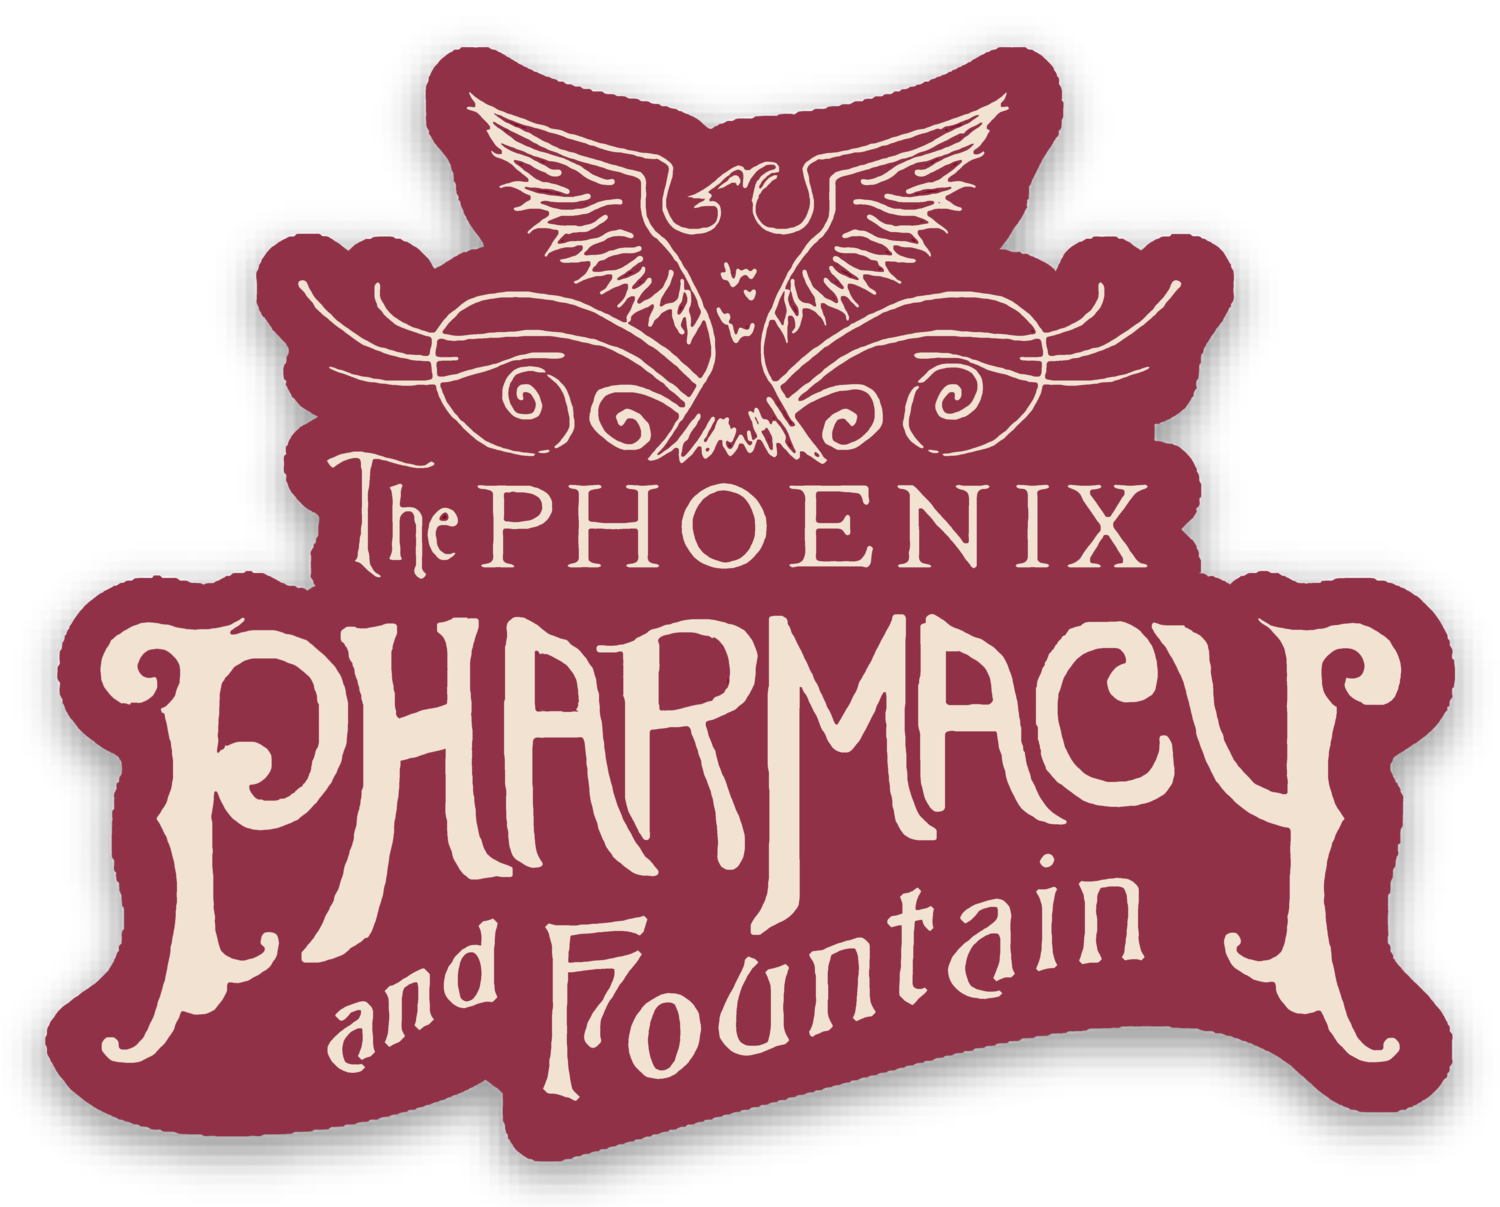 The Phoenix Pharmacy & Fountain